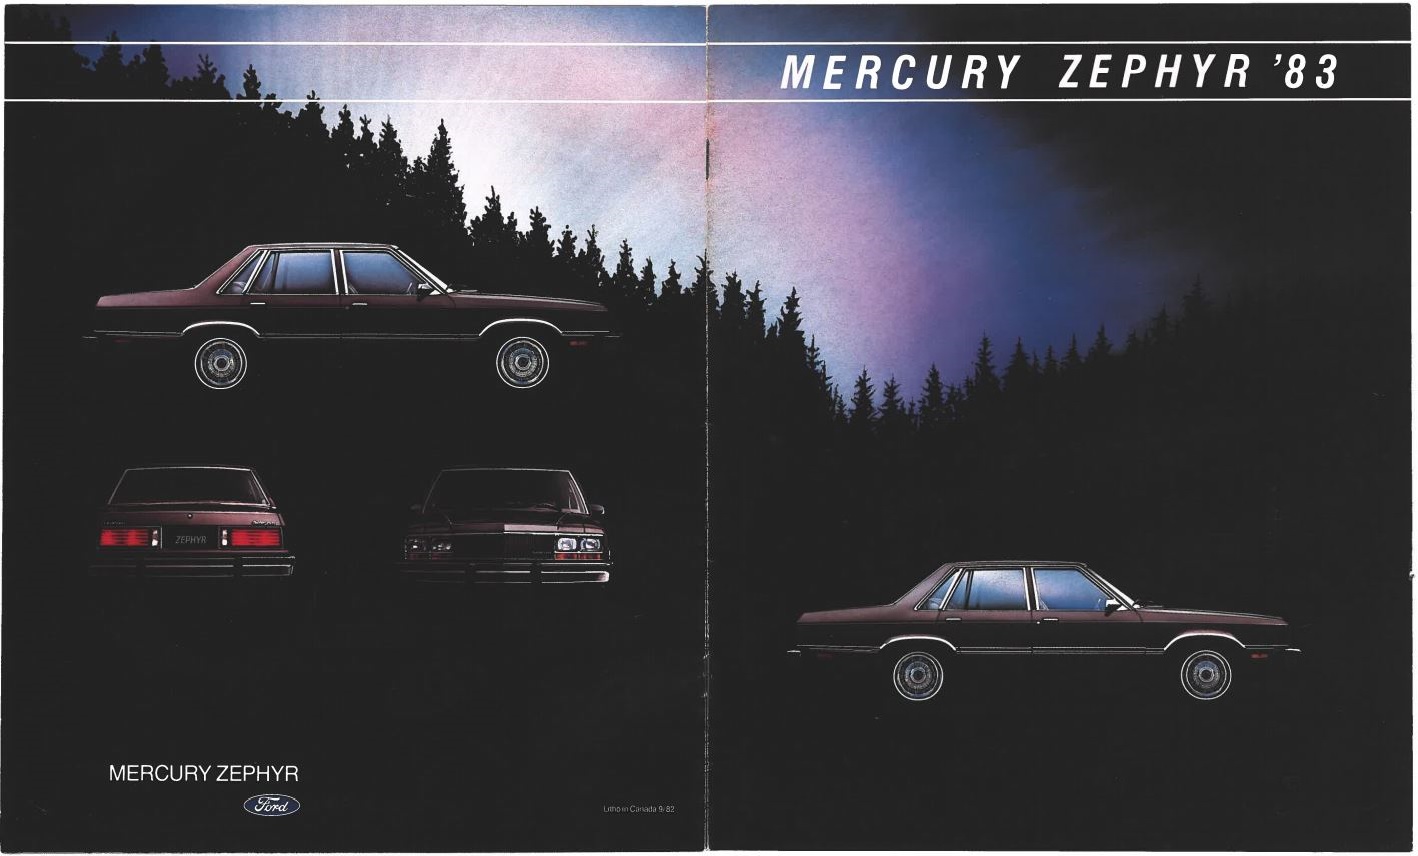 1983 Mercury Zephyr Brochure (Cdn) 08-01